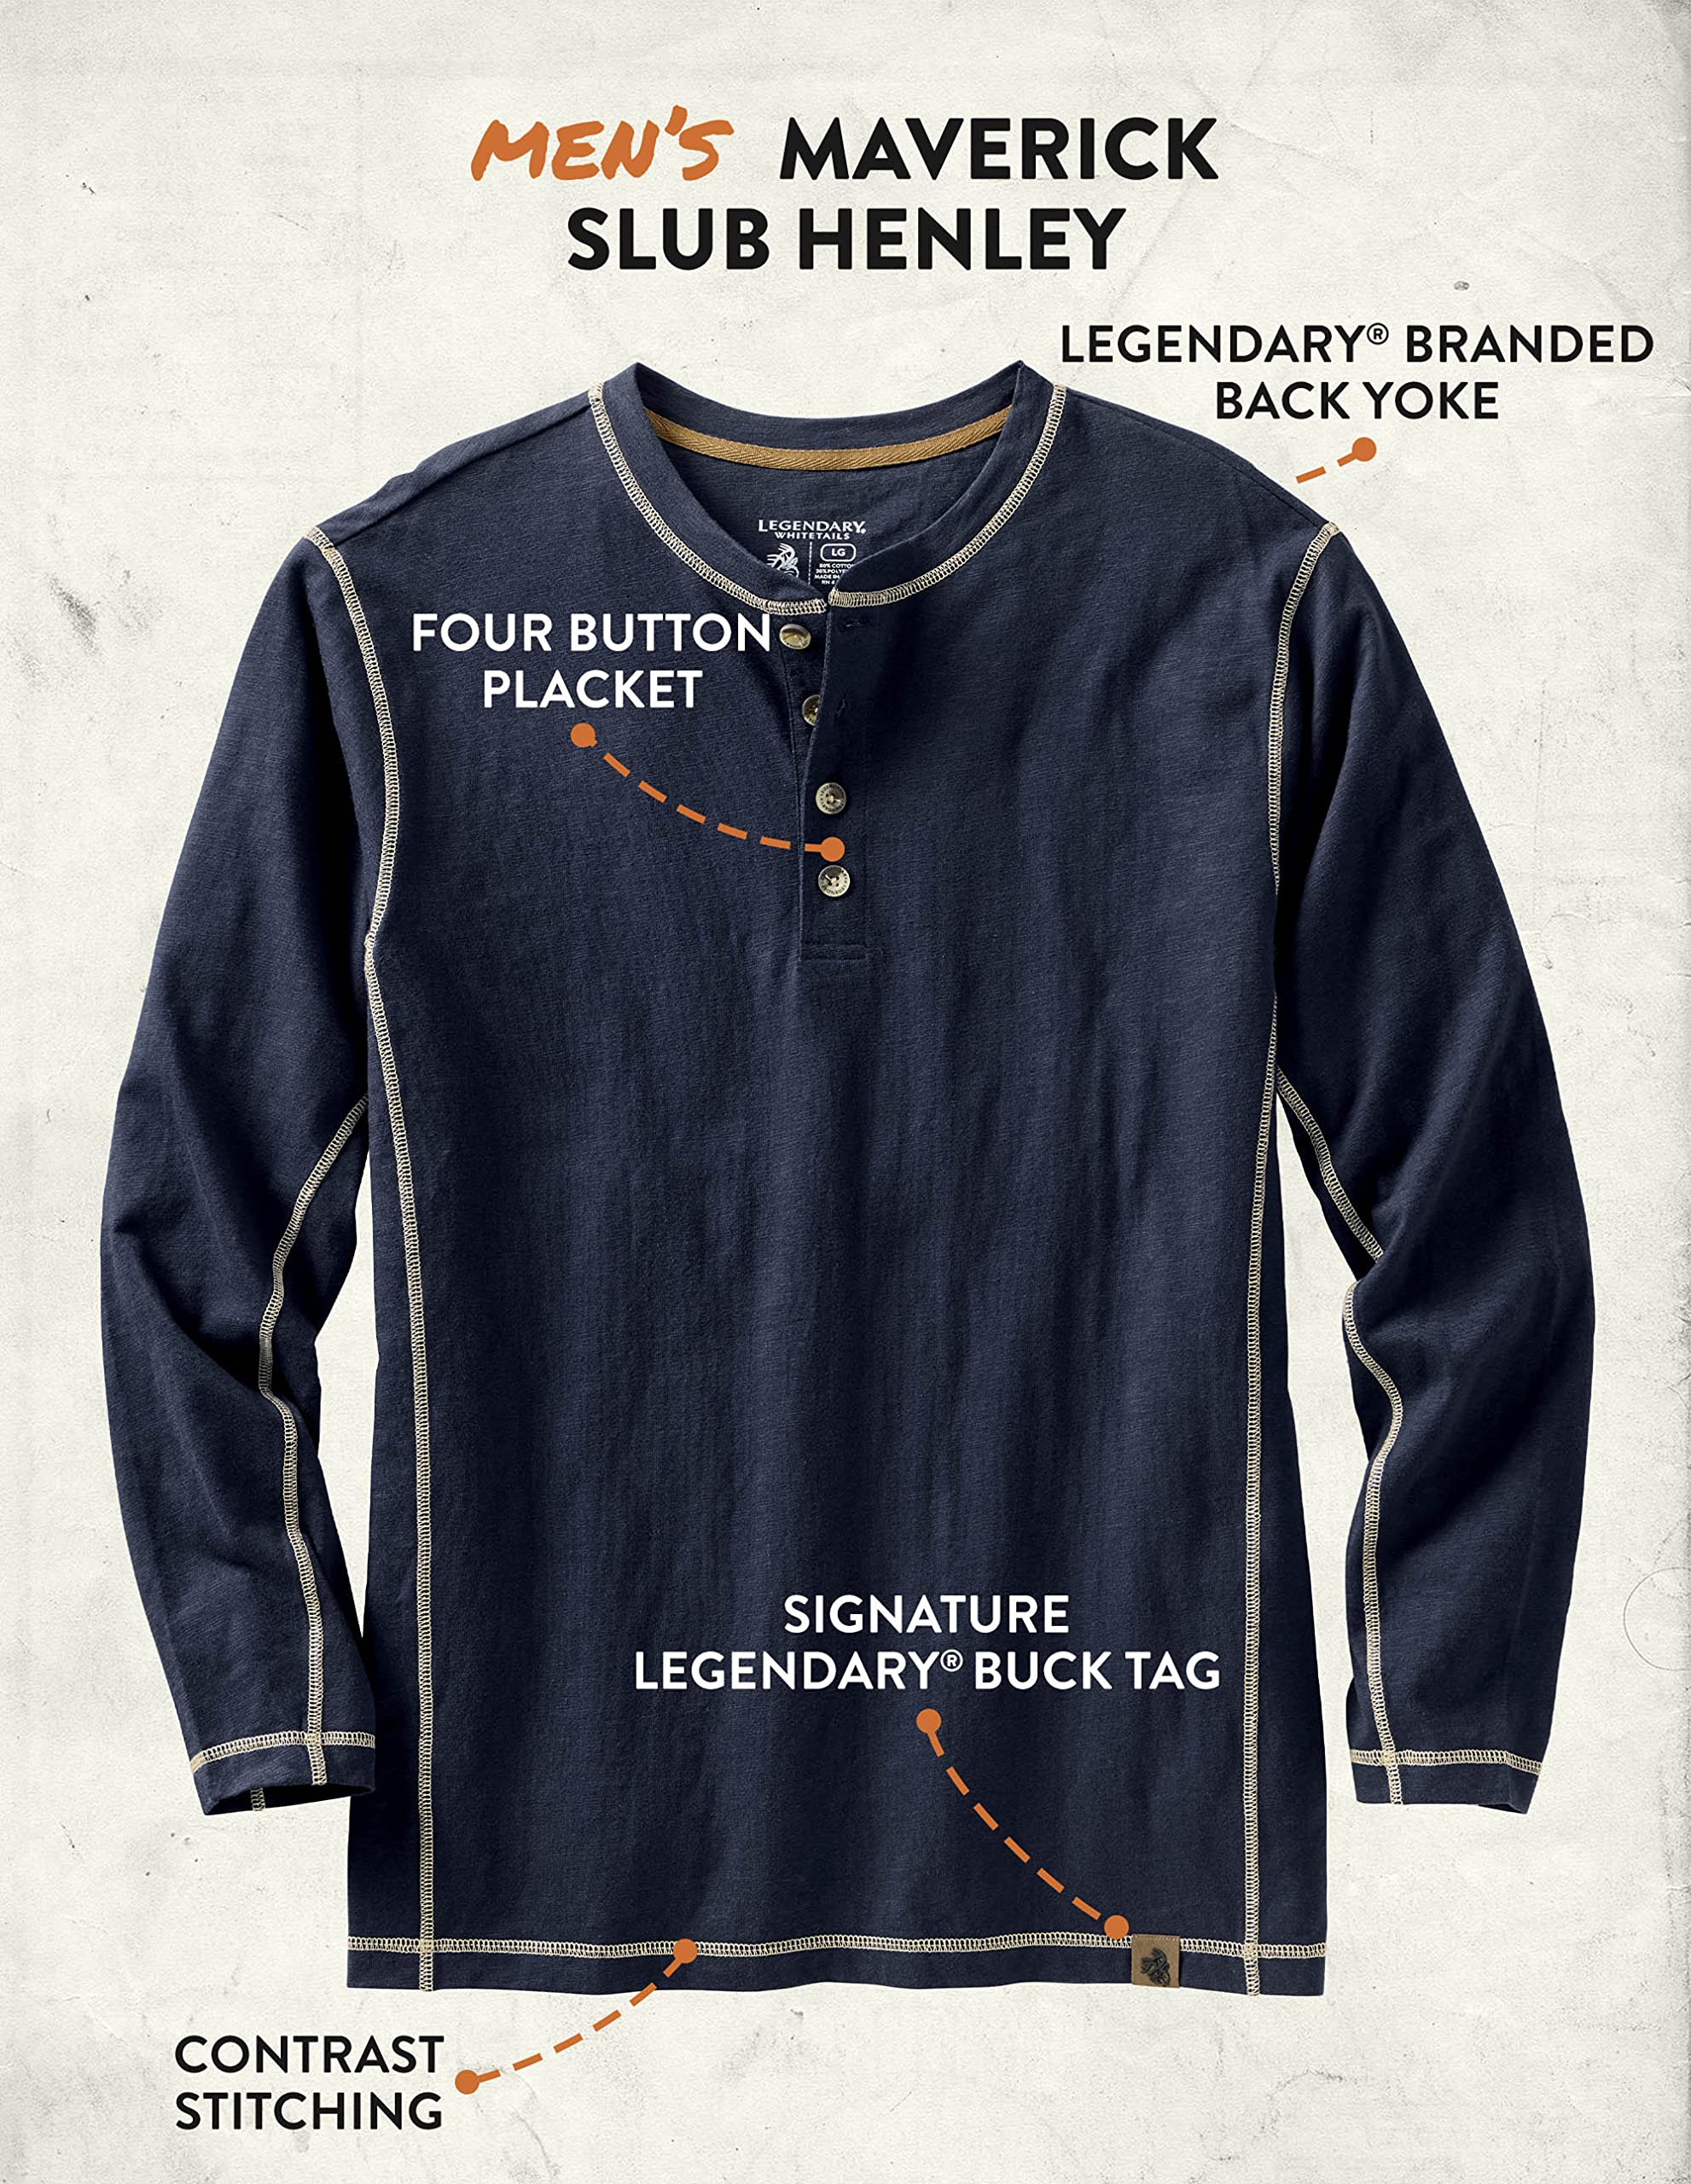 Legendary Whitetails Men's Maverick Slub Henley Shirt